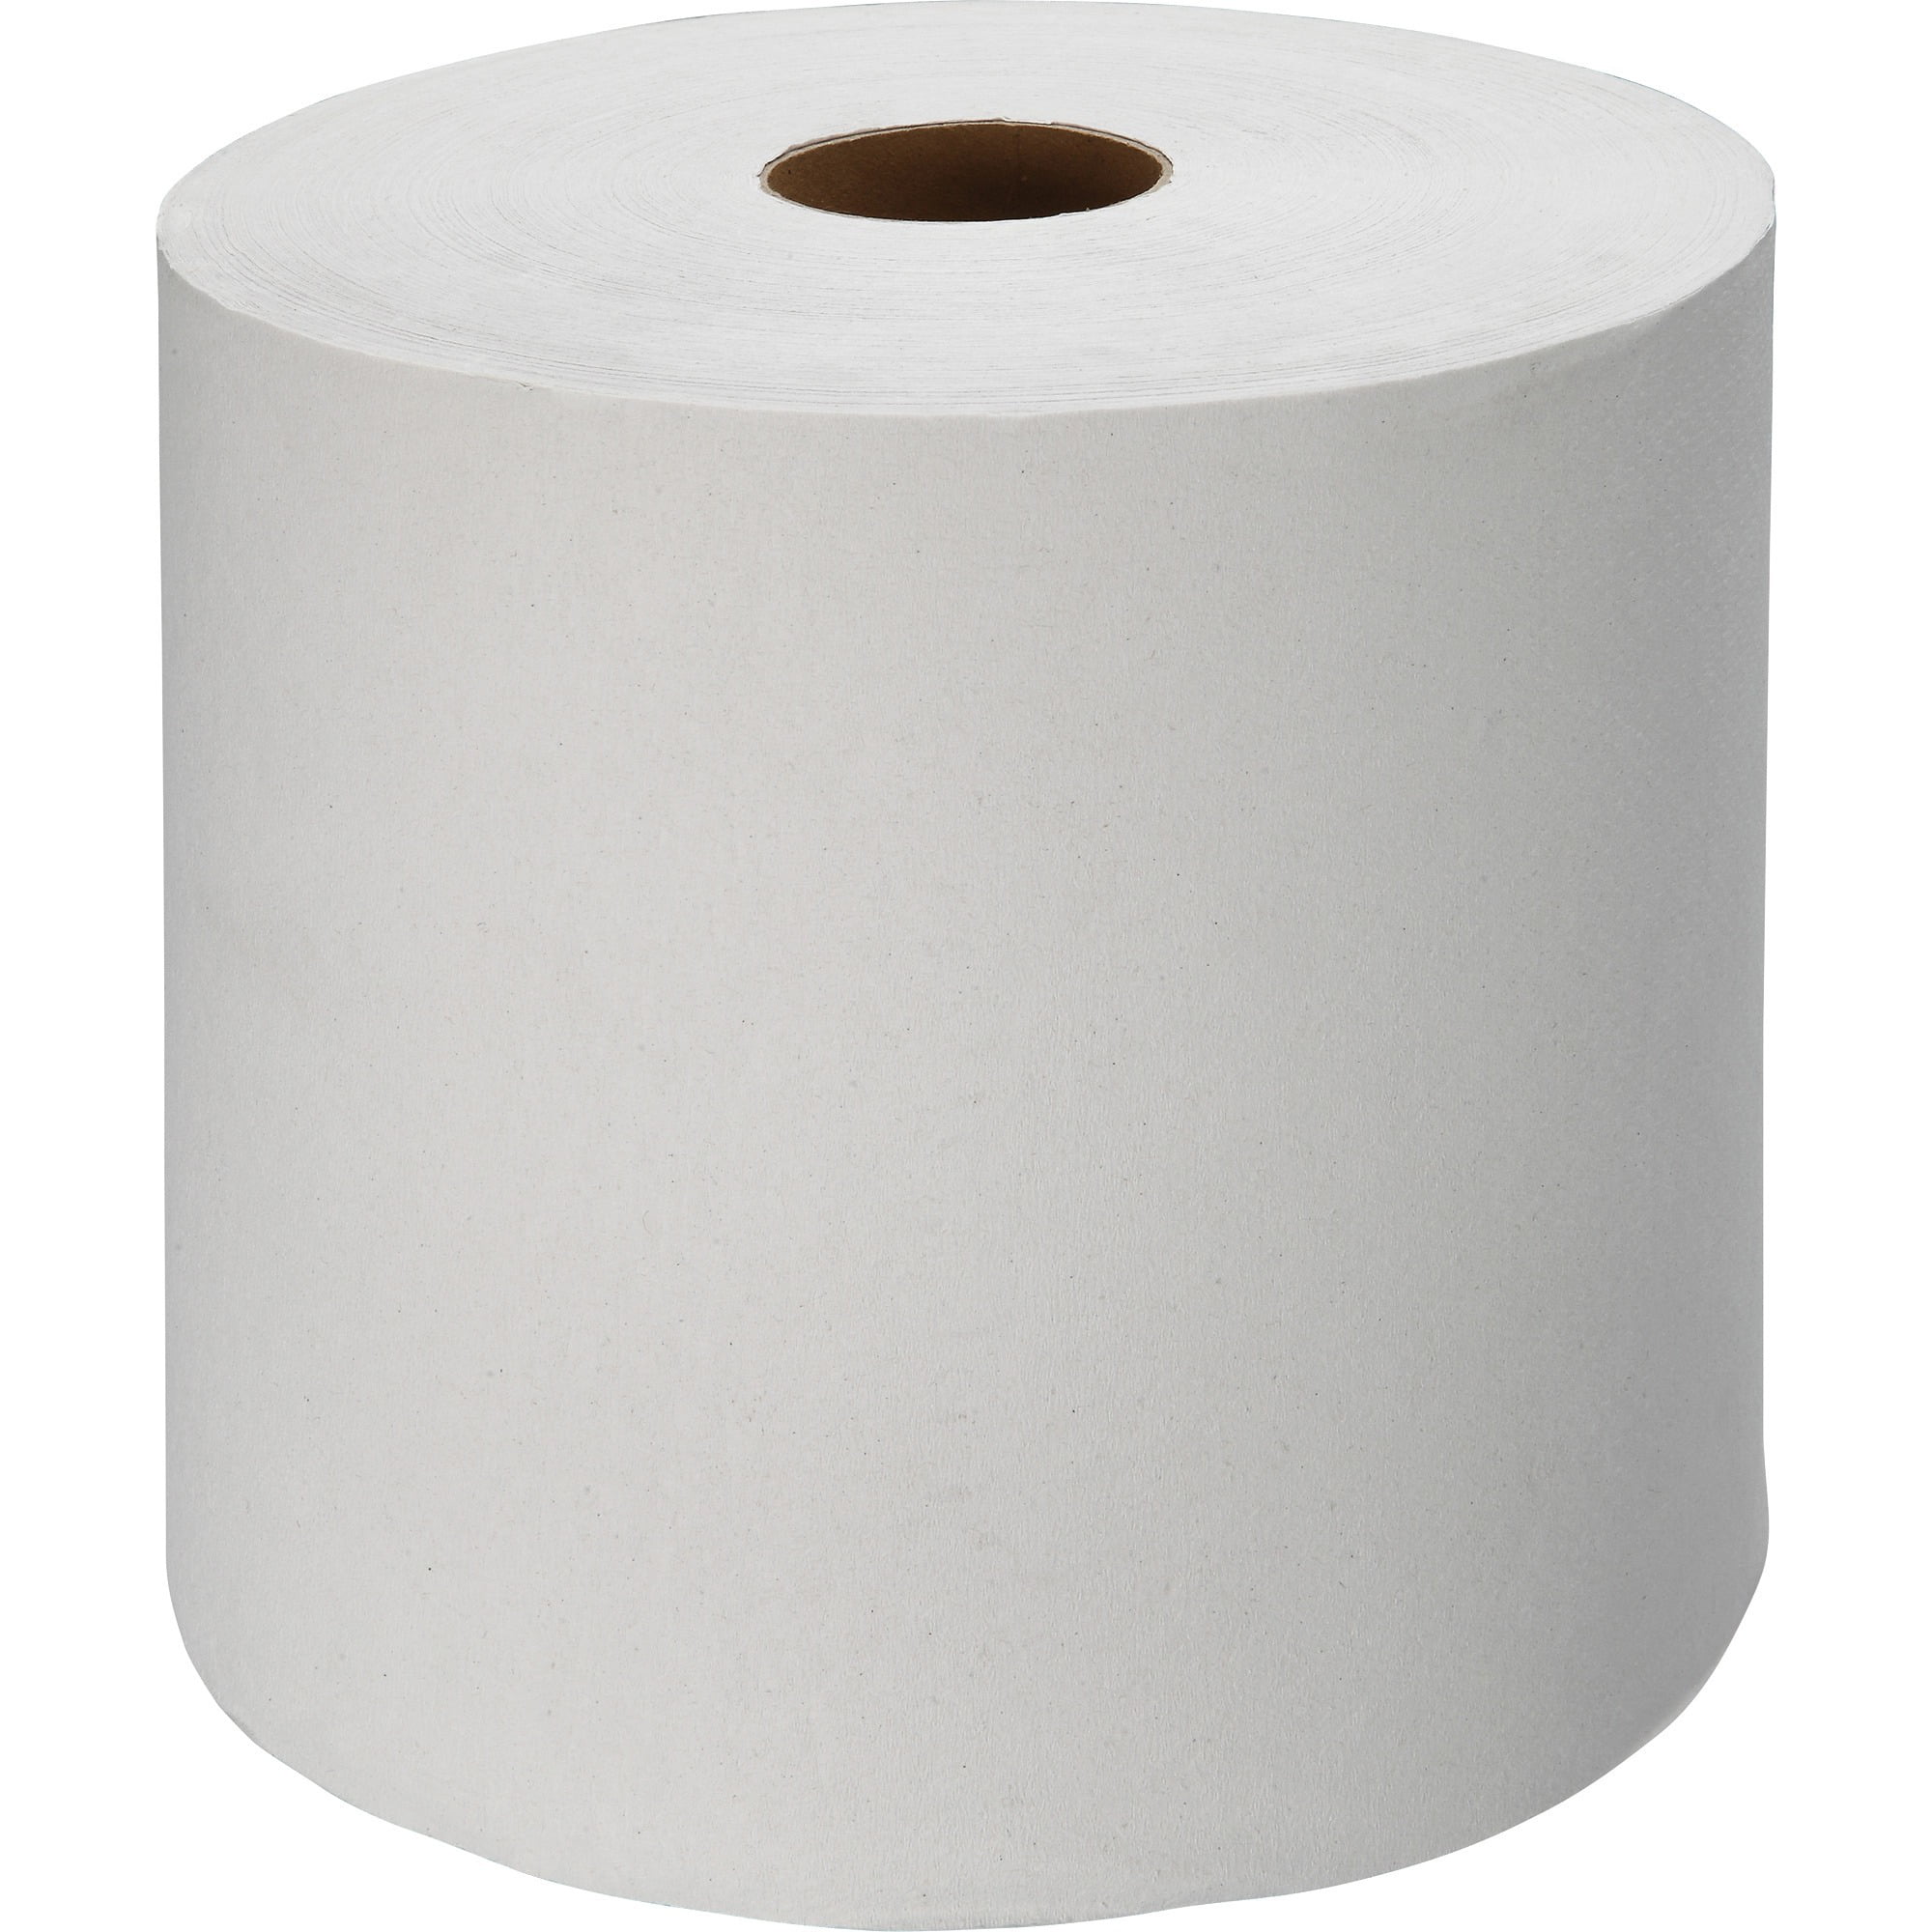 Details about   Genuine Joe Hardwound Roll Paper Towels 6 / Carton Quantity White 